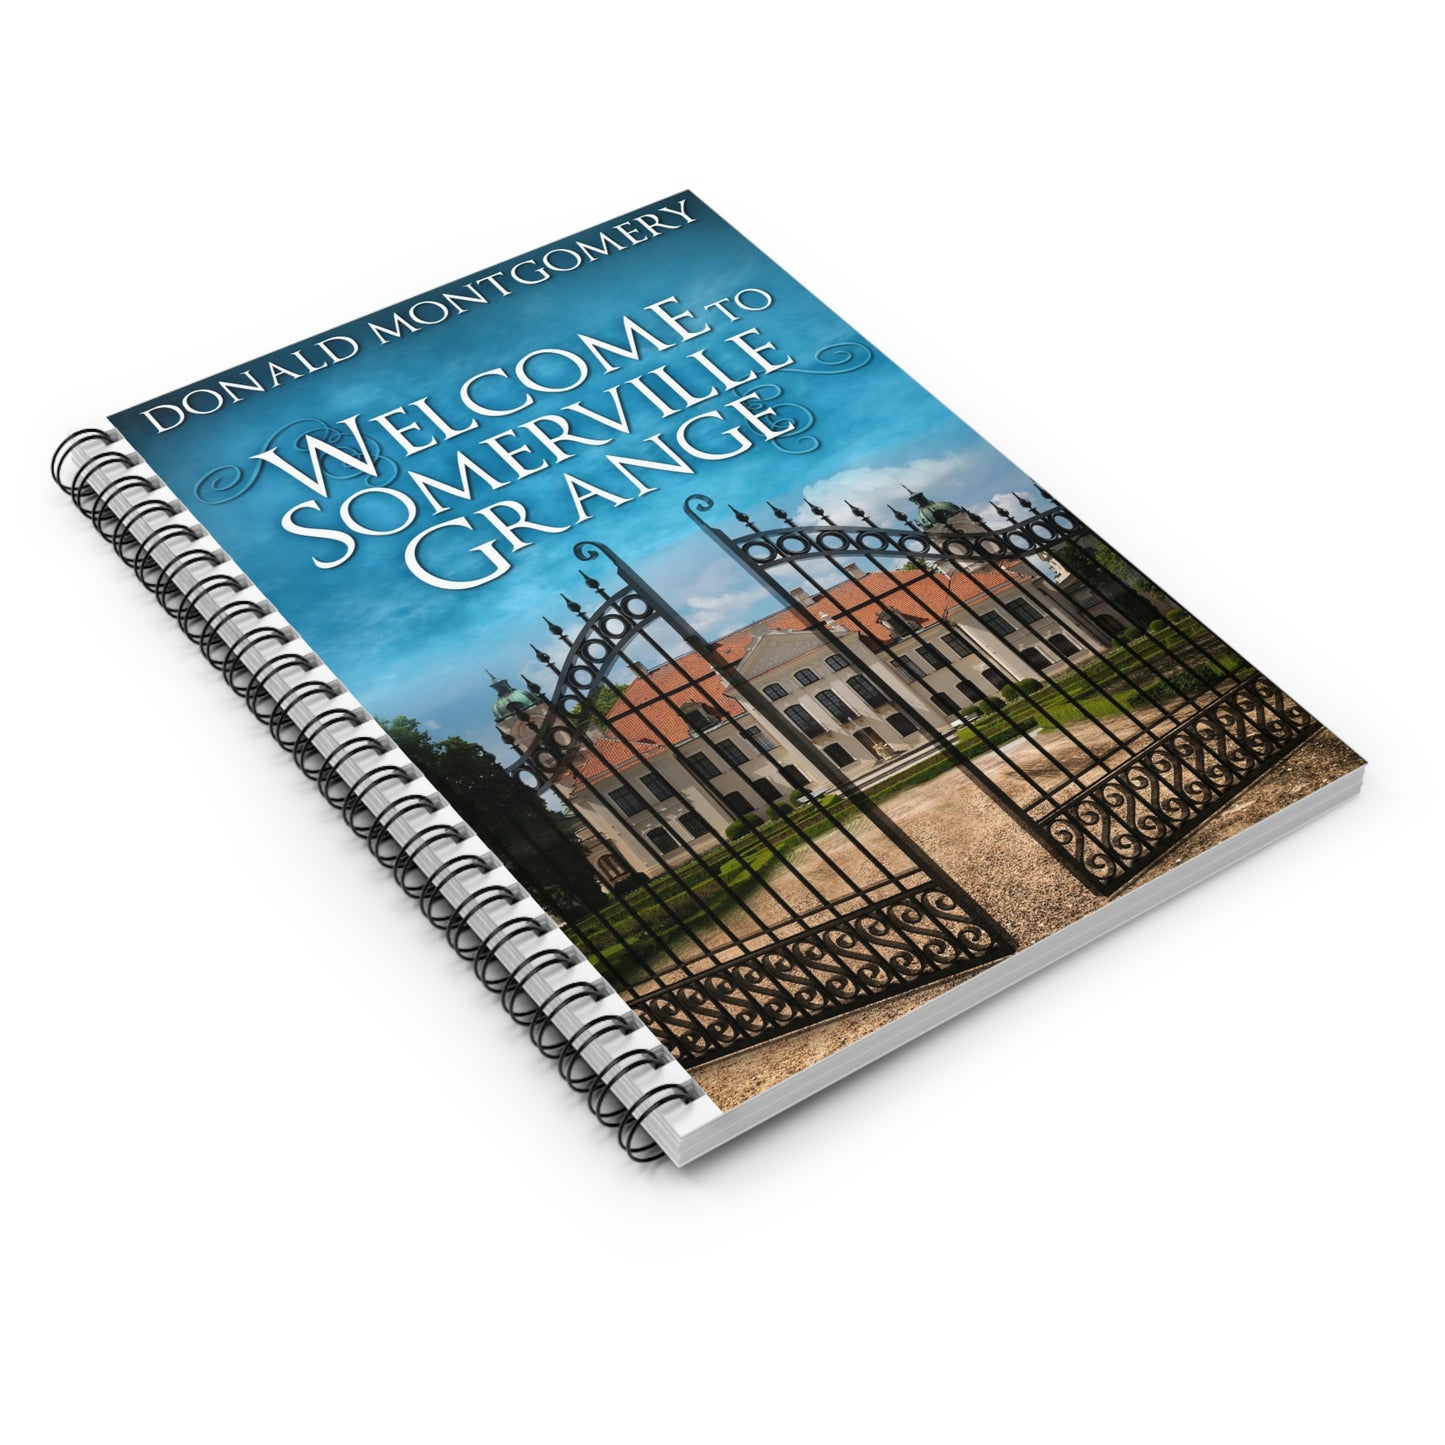 Welcome To Somerville Grange - Spiral Notebook